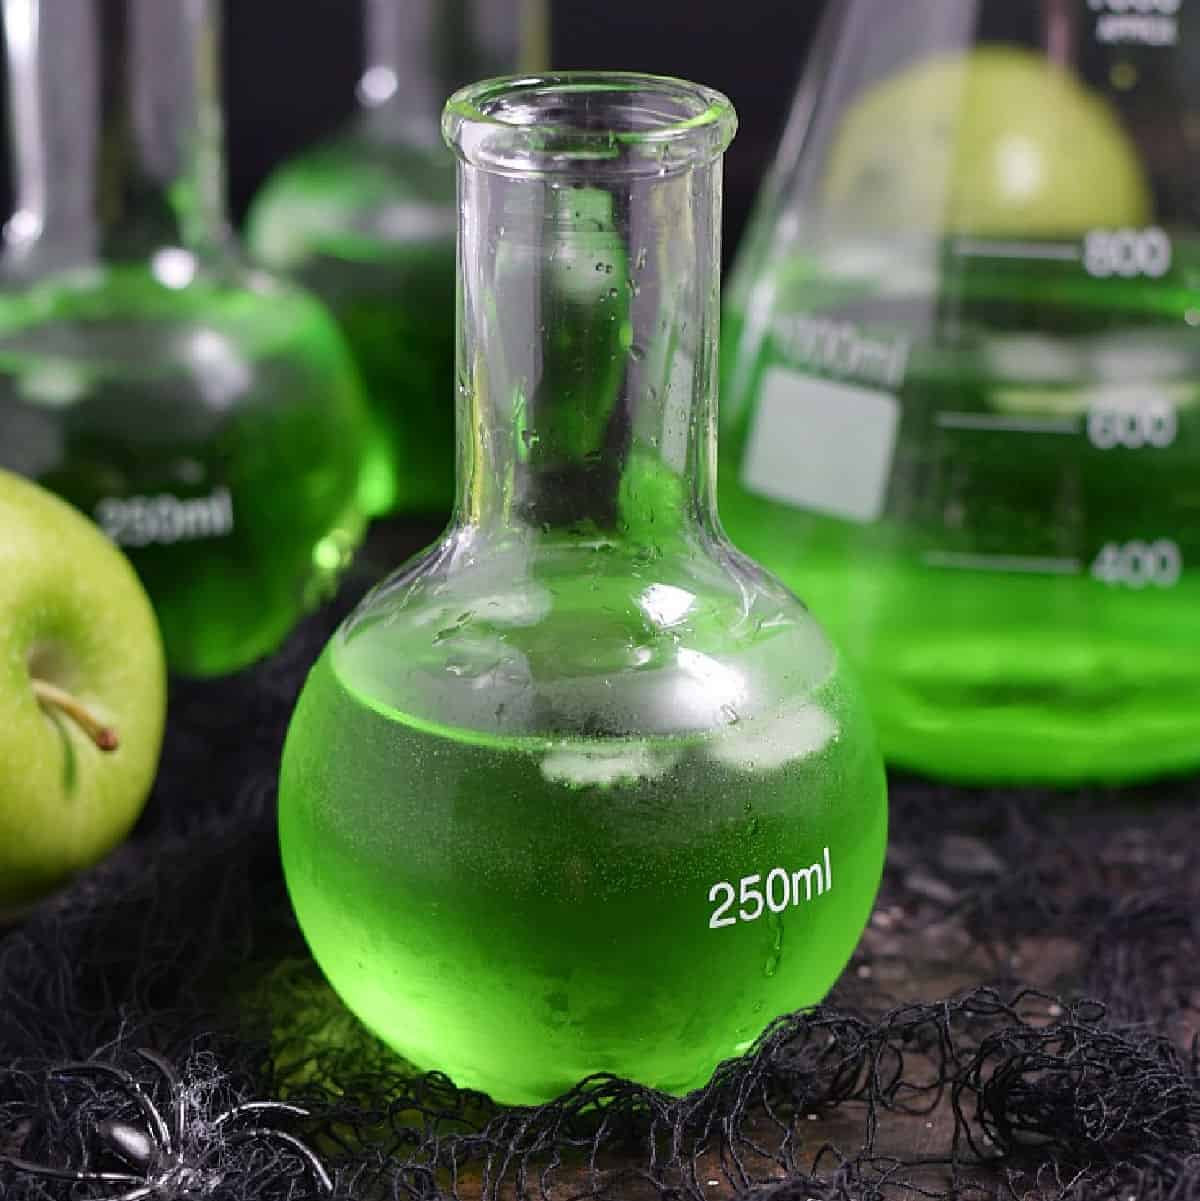 Poisoned Apple Cocktail